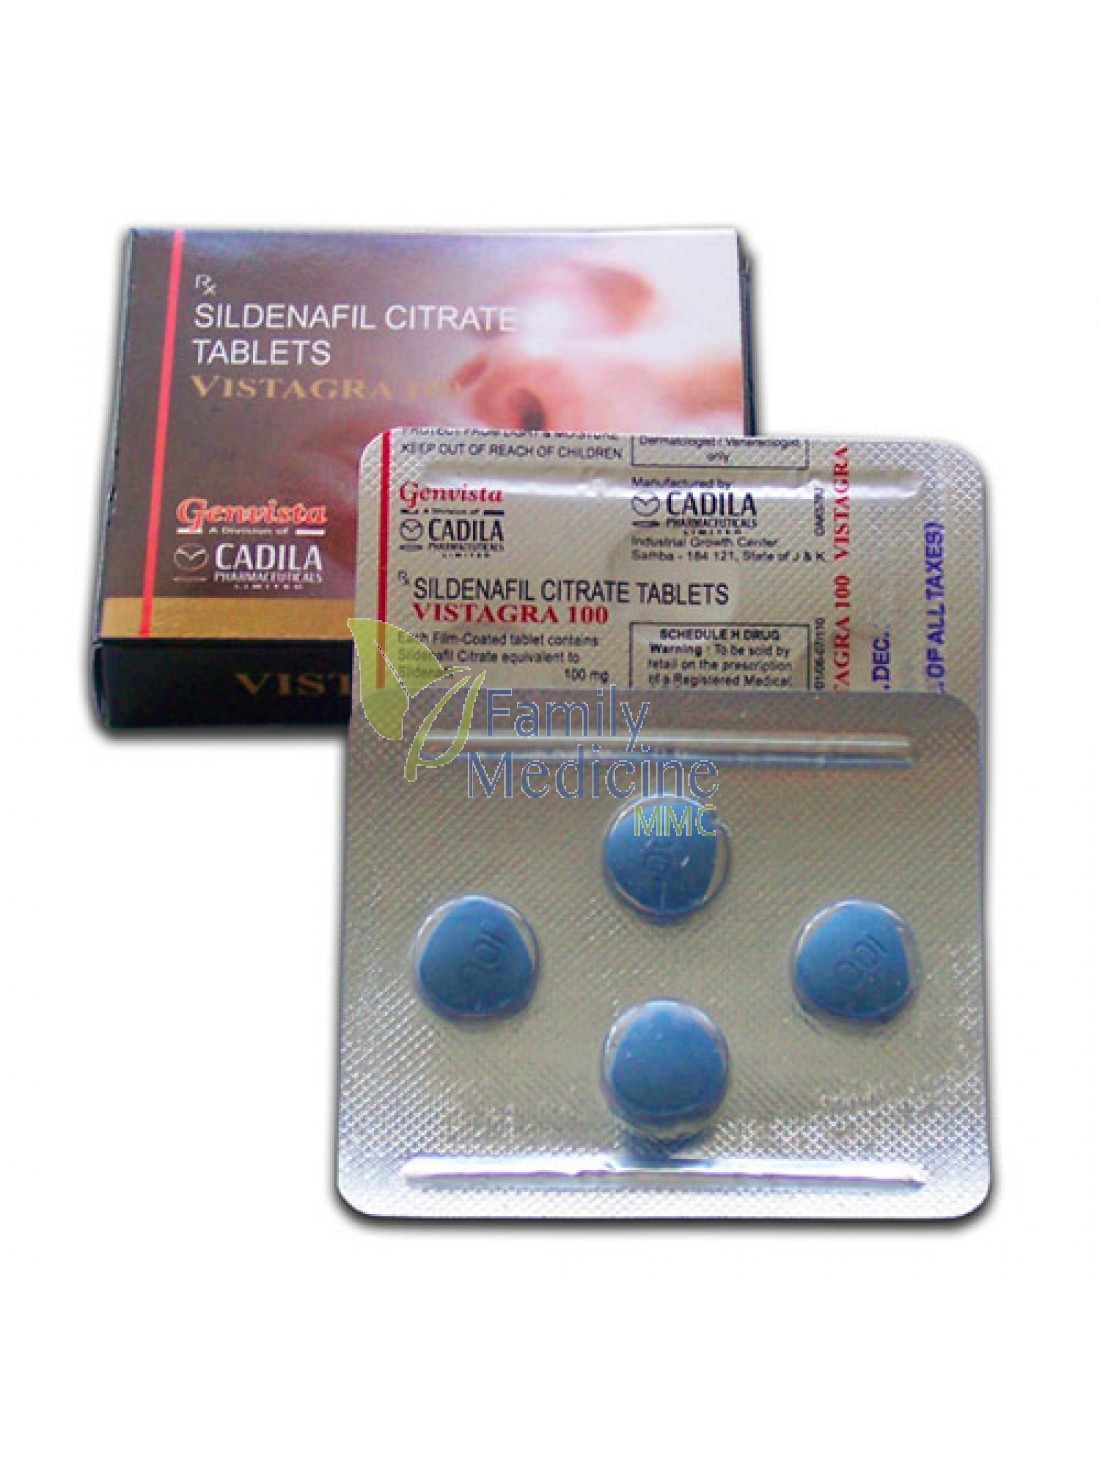 Tadalafil 5 mg rezeptfrei kaufen